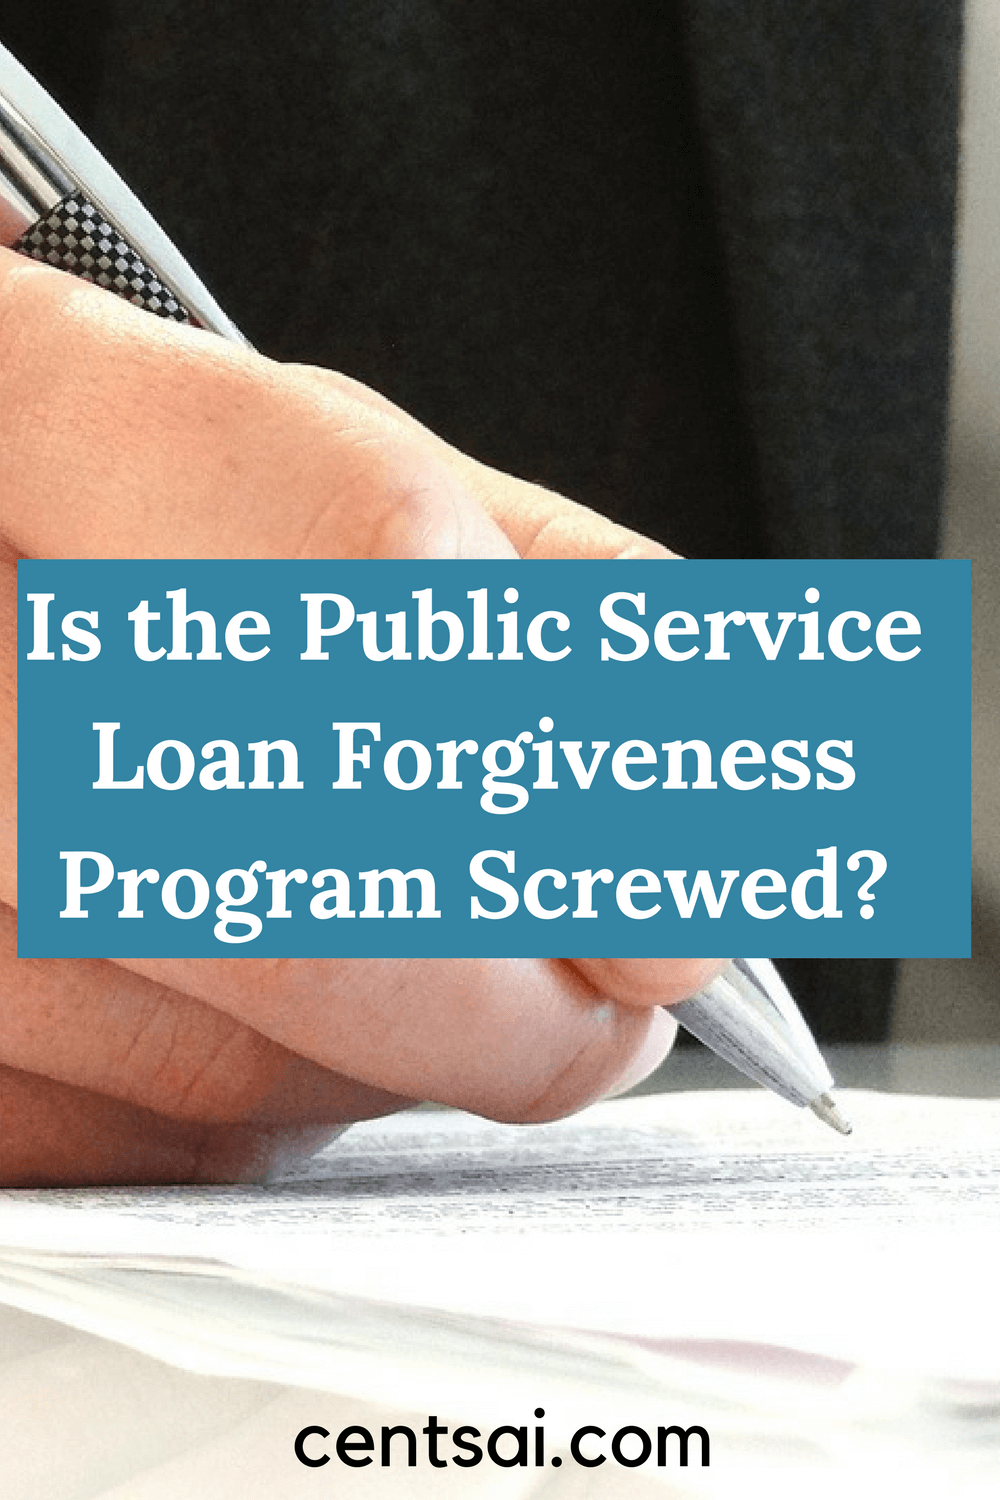 Is the Public Service Loan Forgiveness Program Screwed